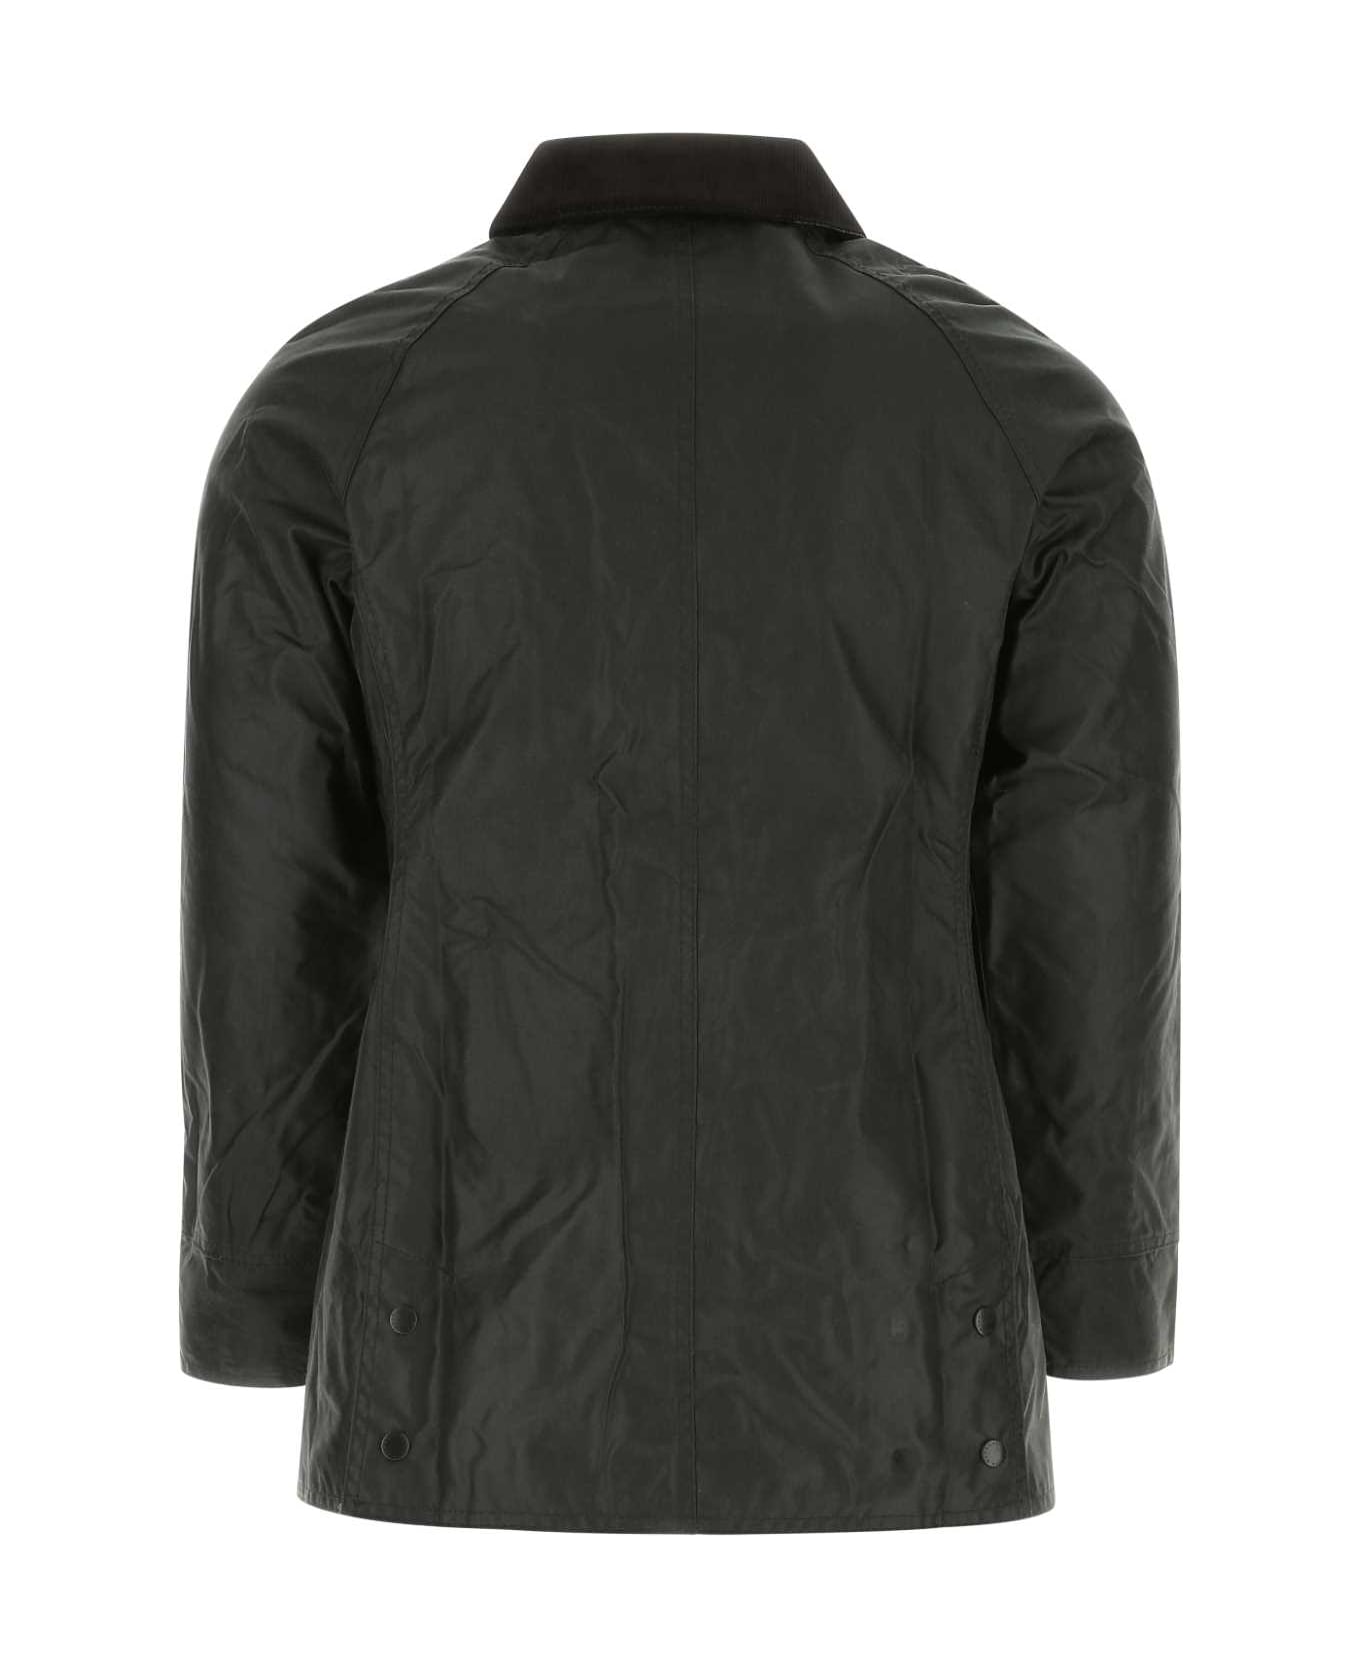 Barbour Dark Green Cotton Beadnell Jacket - SG91